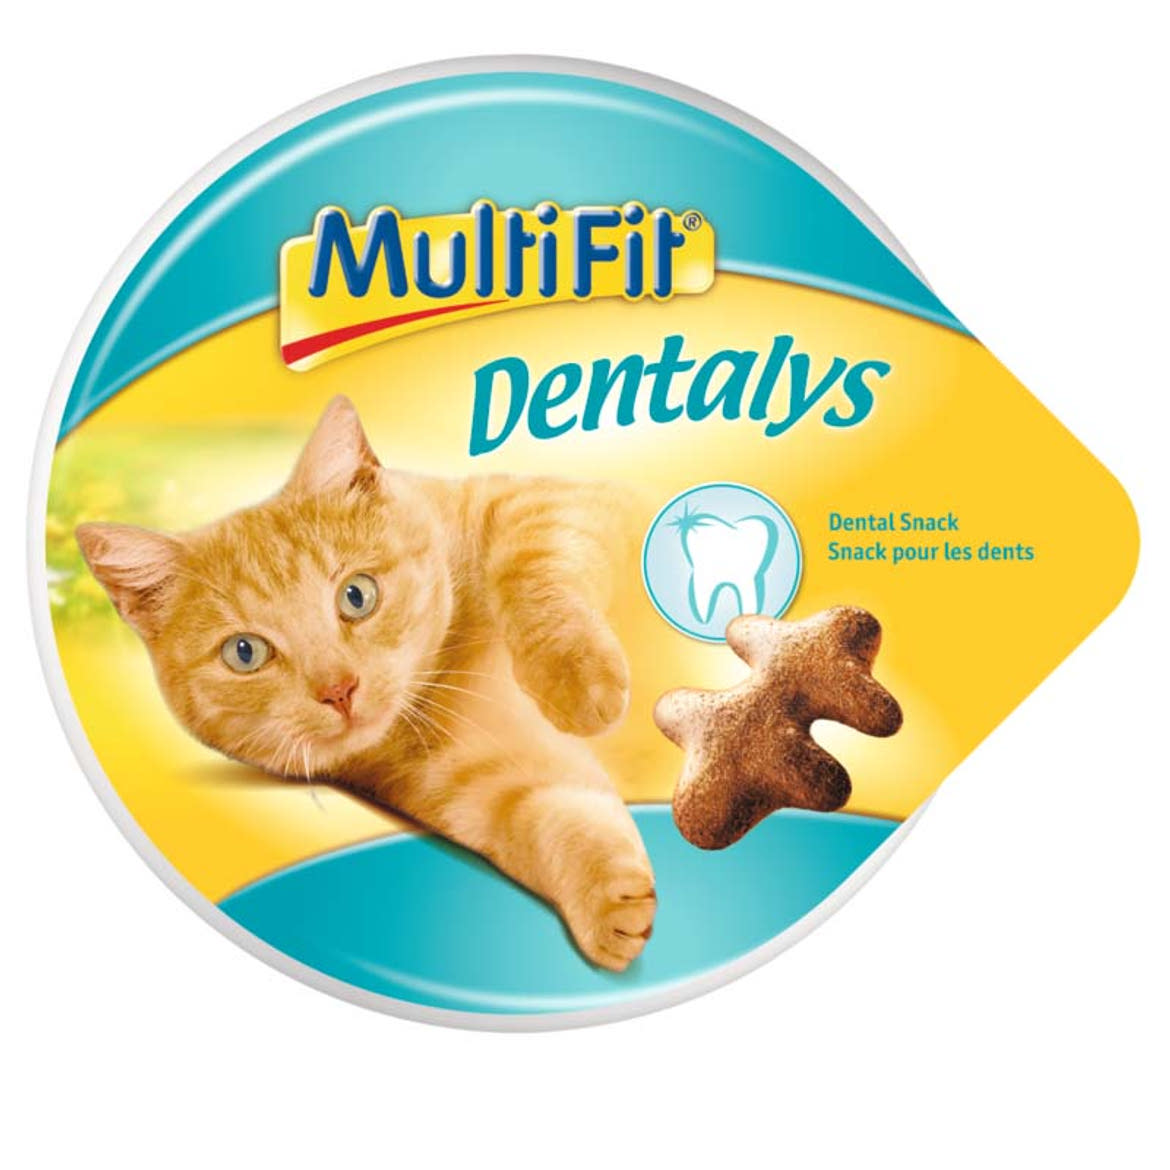 MultiFit Dentalys macska jutalomfalat